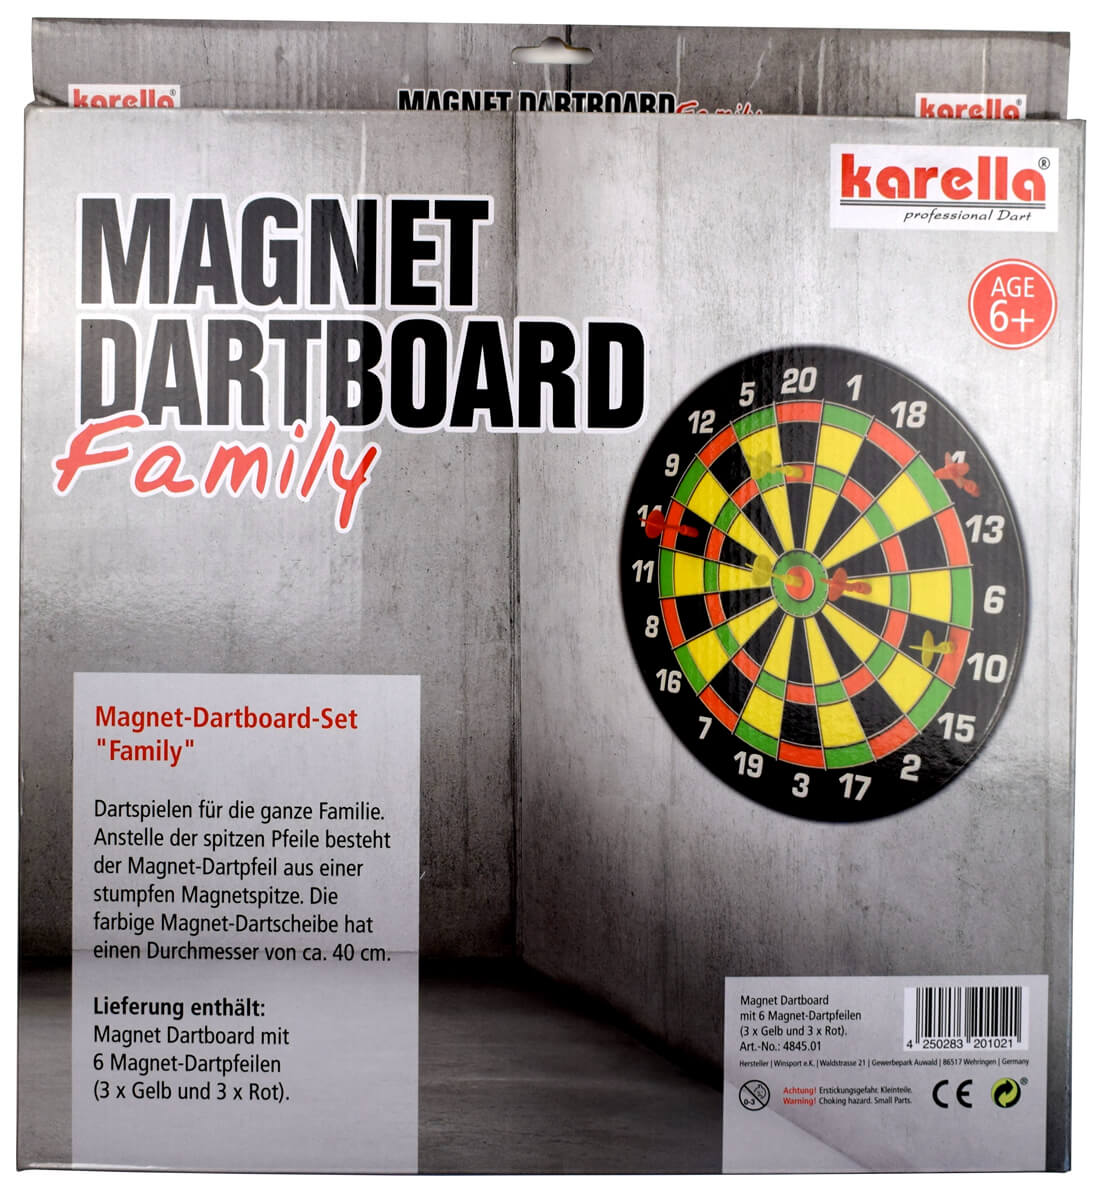 Family Magnet-Dartboard-Set Karella